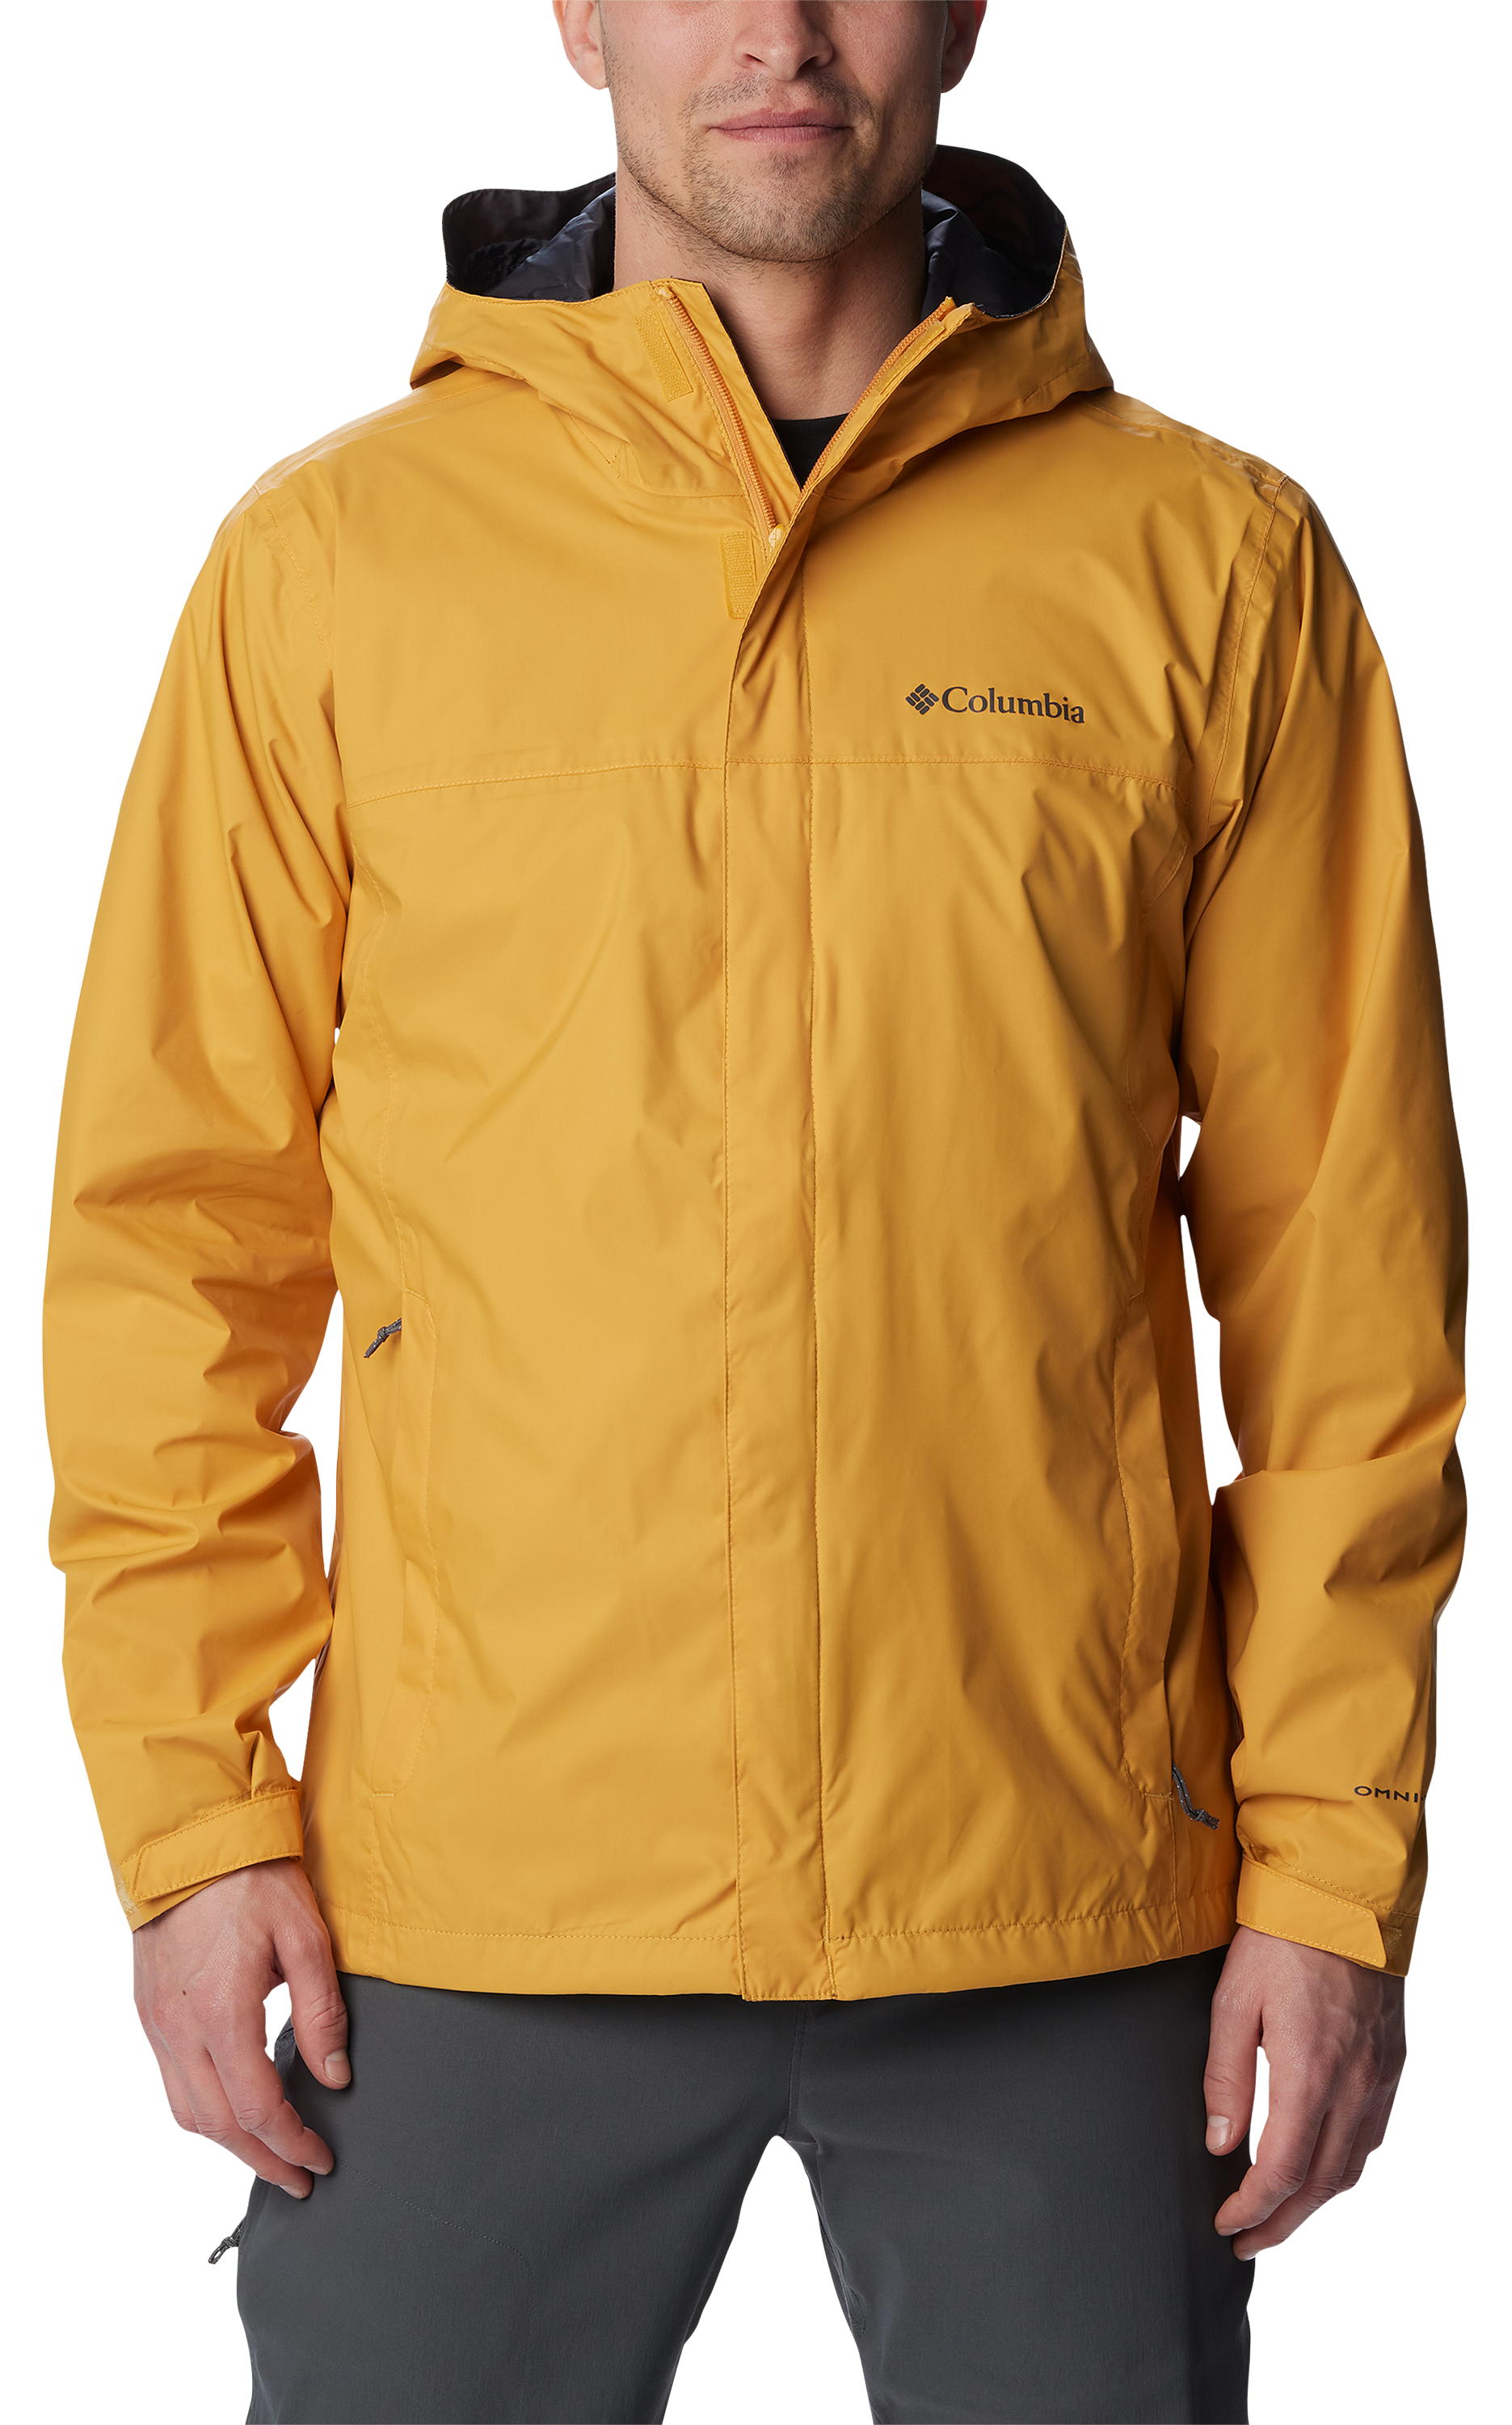 Columbia Watertight II Jacket for Men - Raw Honey - XL